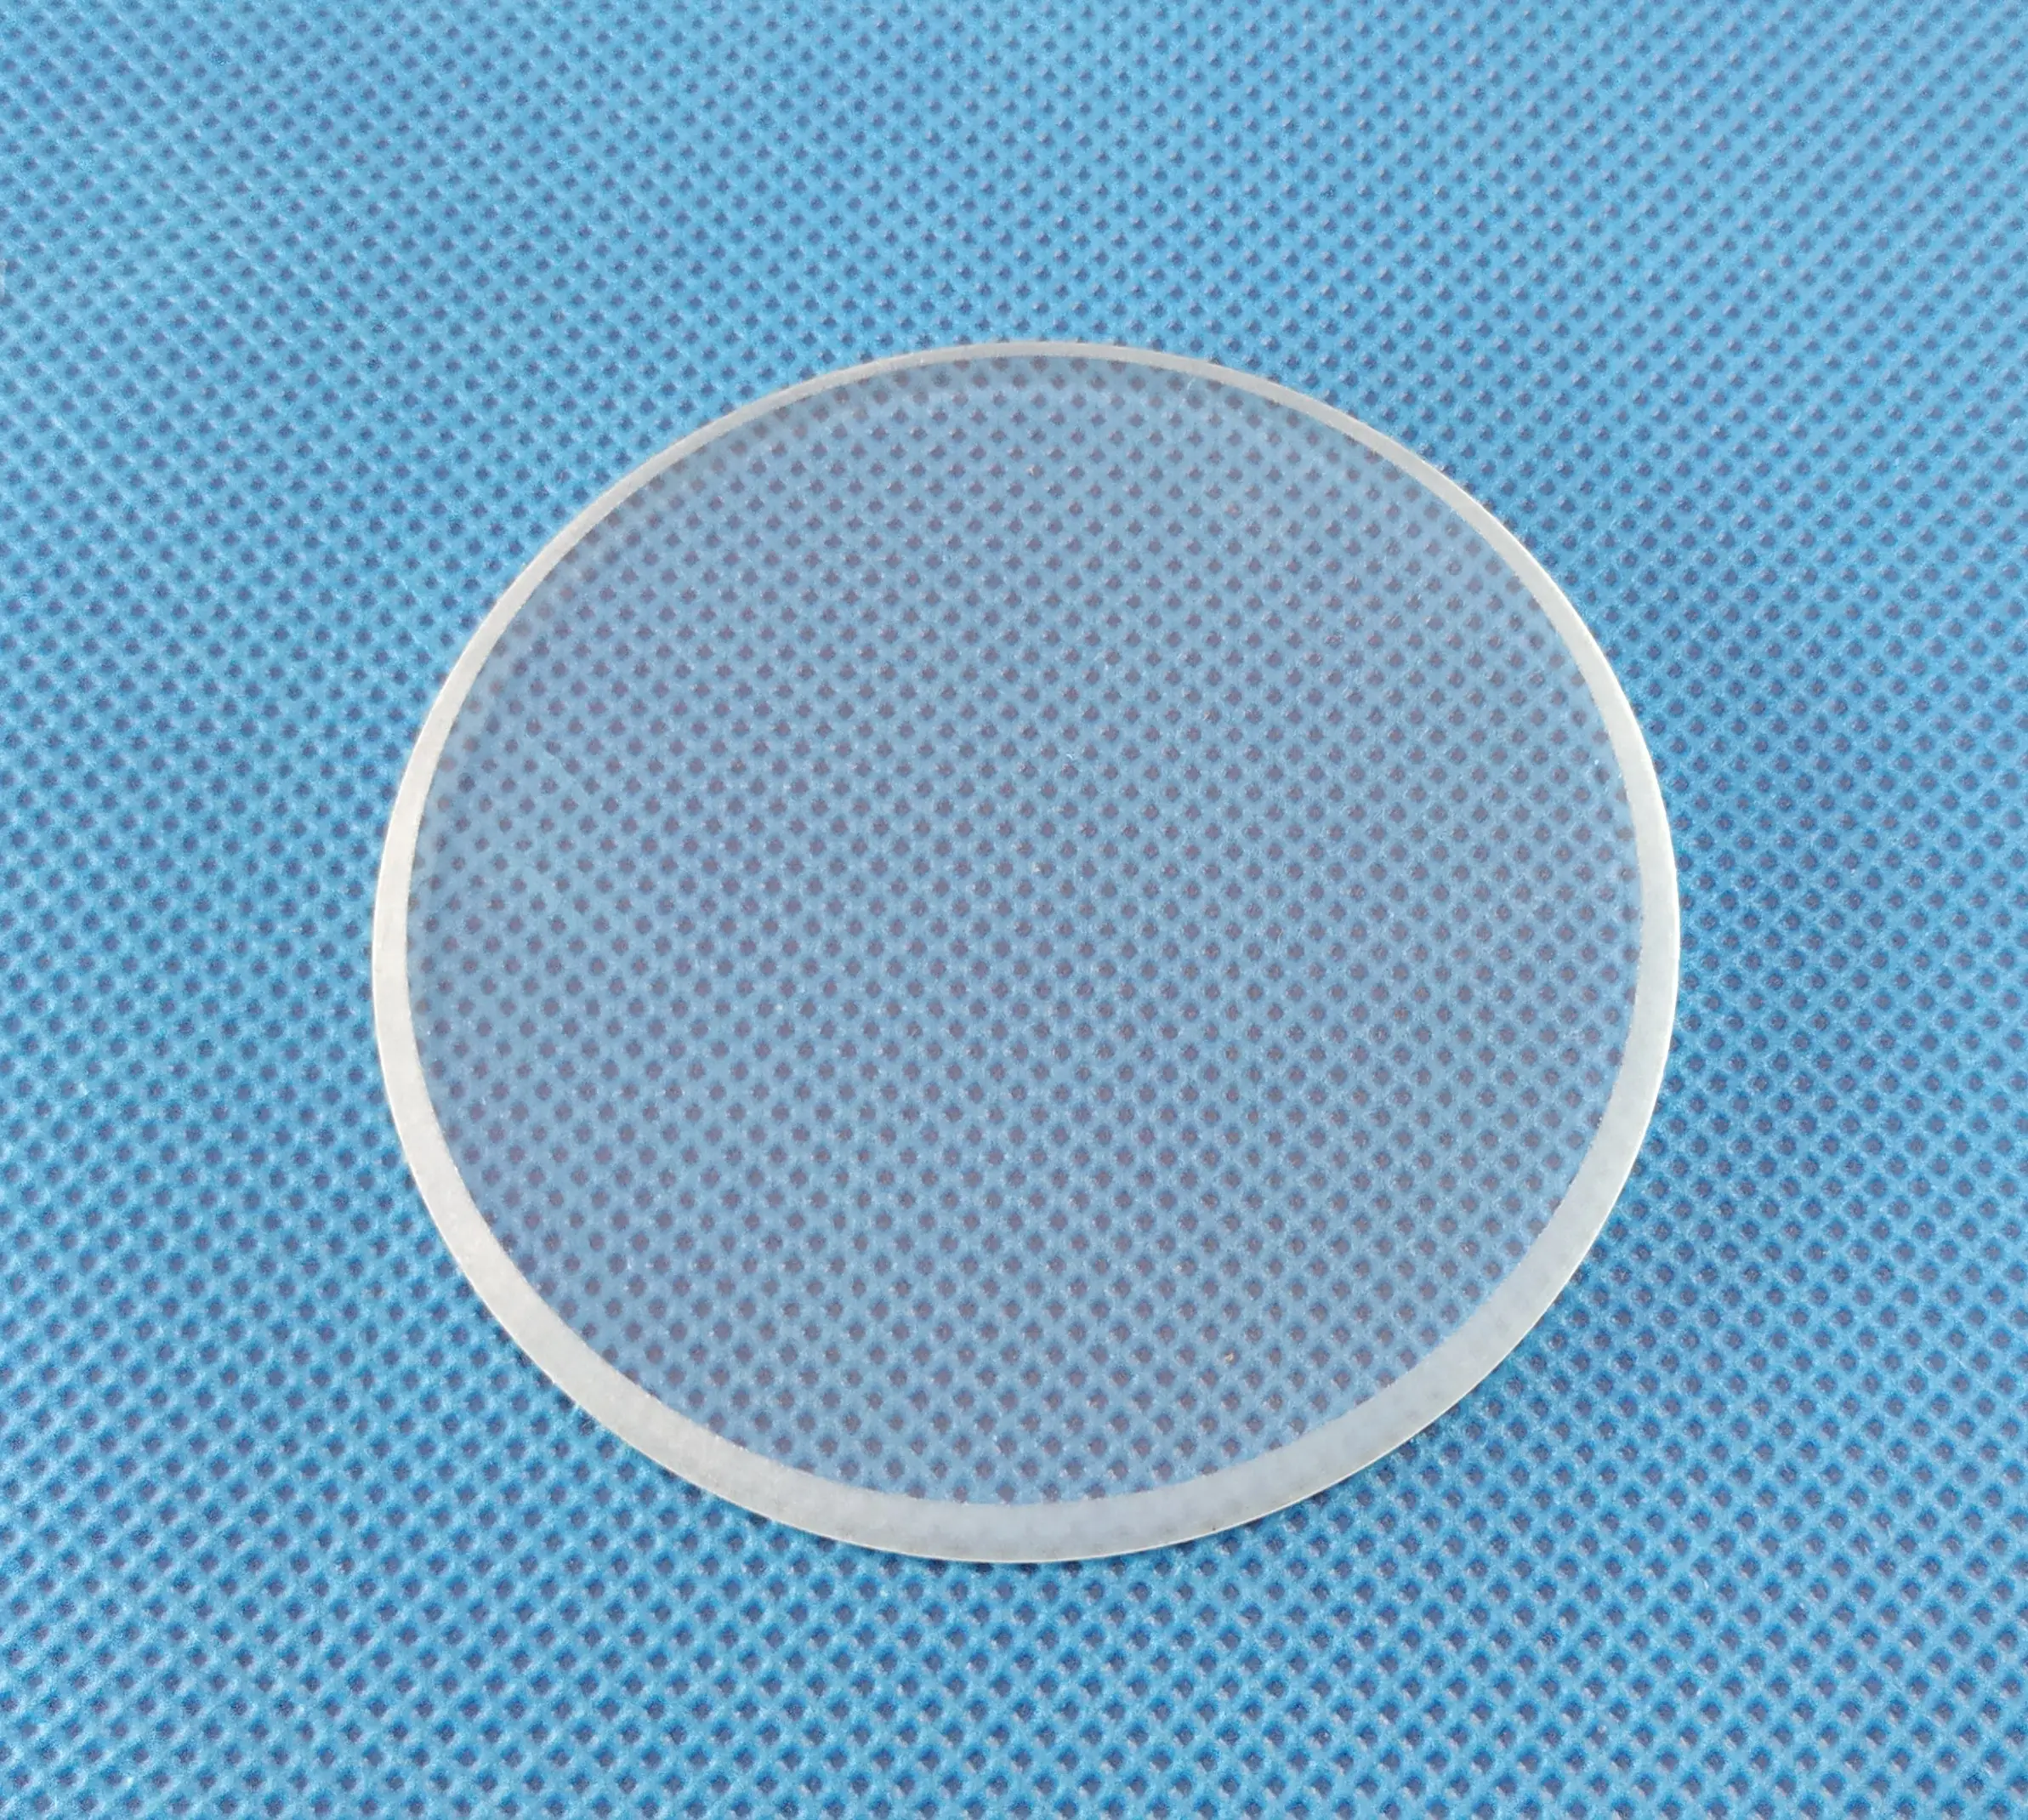 Circular Round Sight Glass Made in China